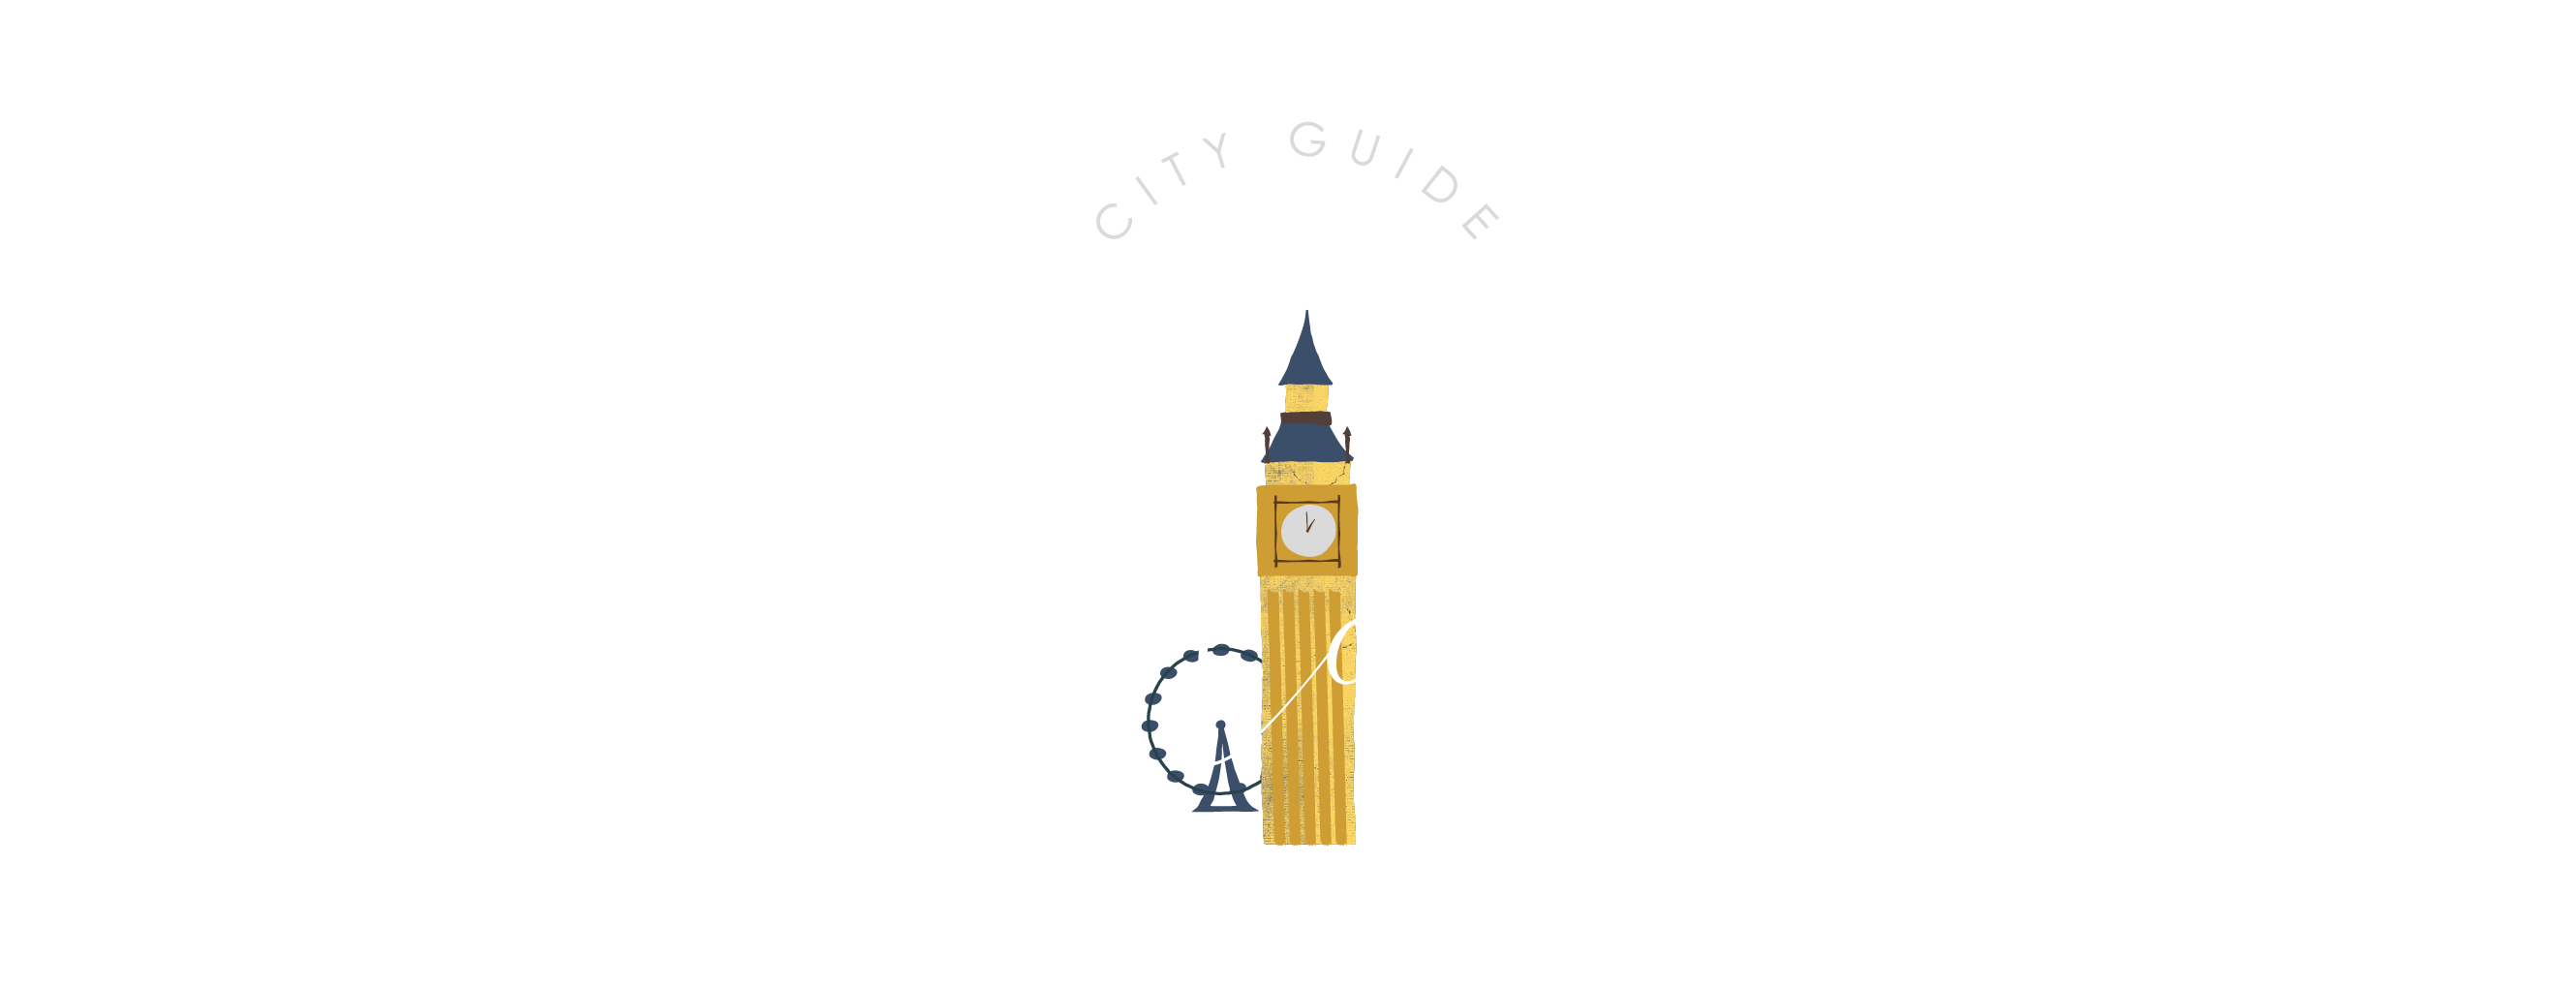 london clipart travel london